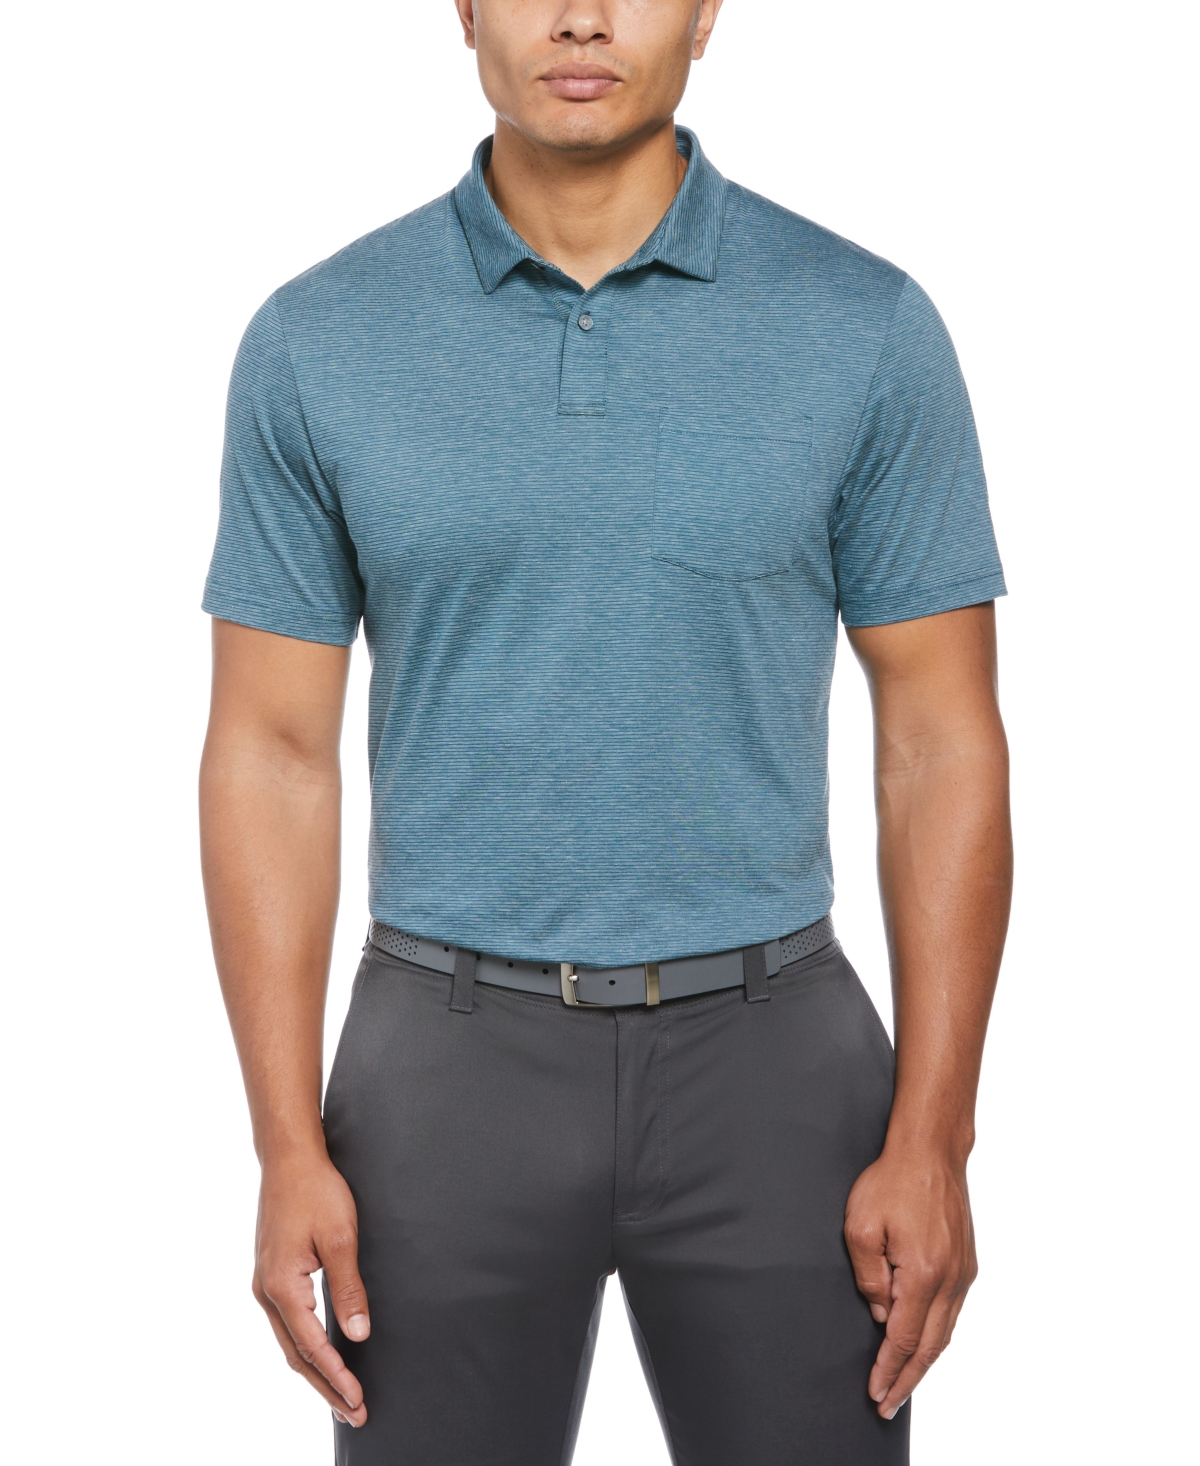 Men's Eco Fine Line Short-Sleeve Golf Polo Shirt - Lt Coronet Blue Heather